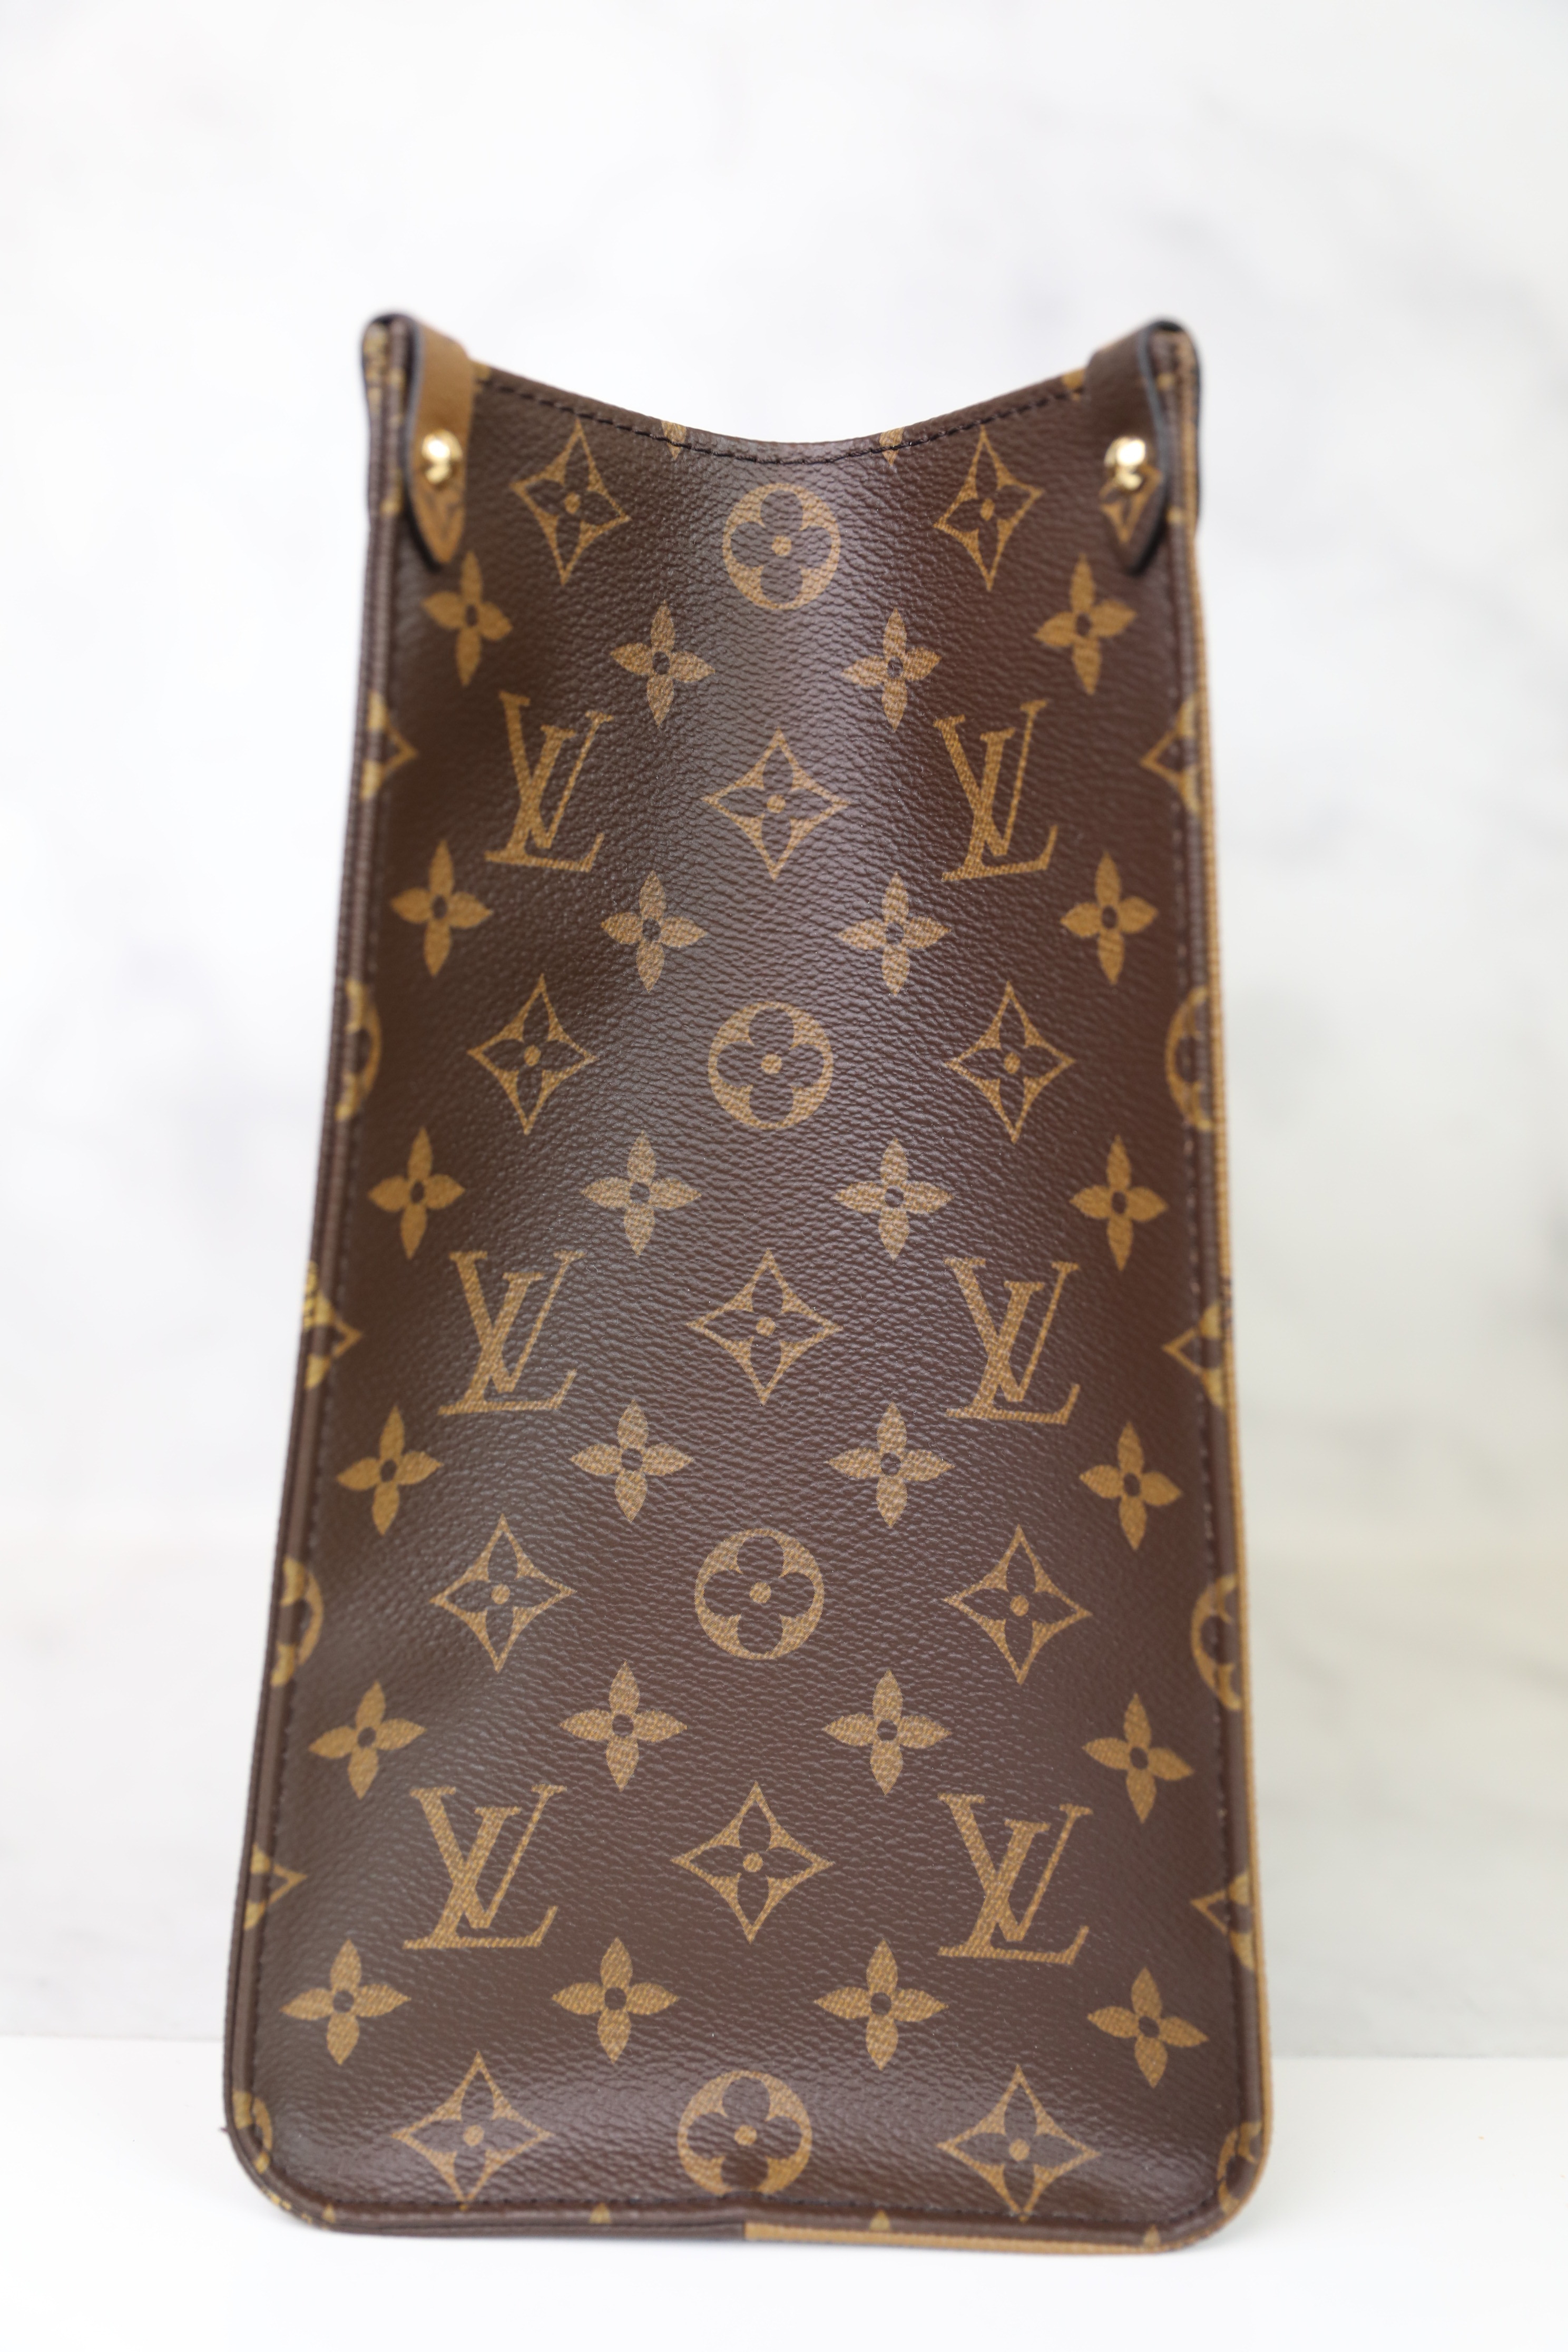 Louis Vuitton Carry It Reverse Monogram Tote, Preowned - No Dustbag - Julia  Rose Boston